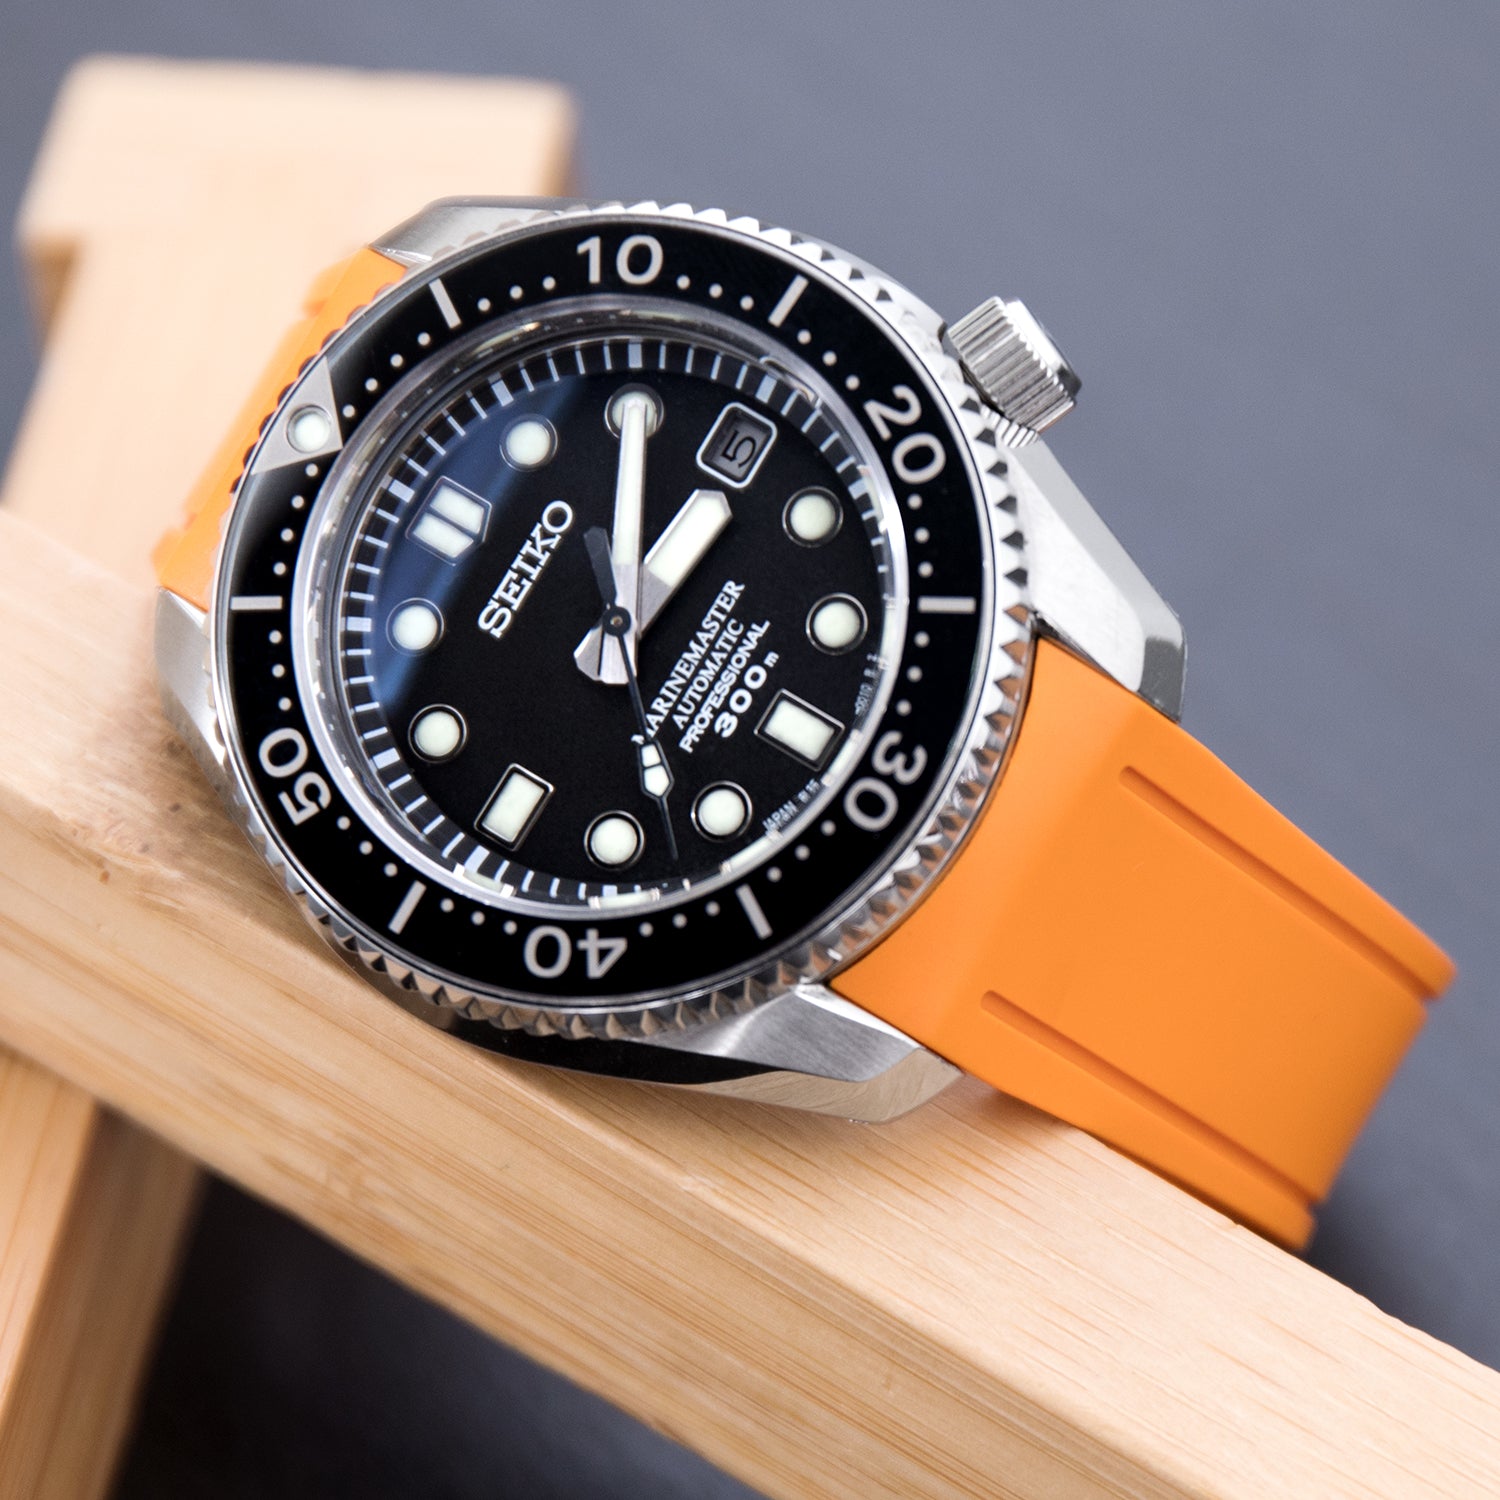 Seiko MM300 SBDX017 Crafter Blue rubber watch bands by Strapcode, Orange